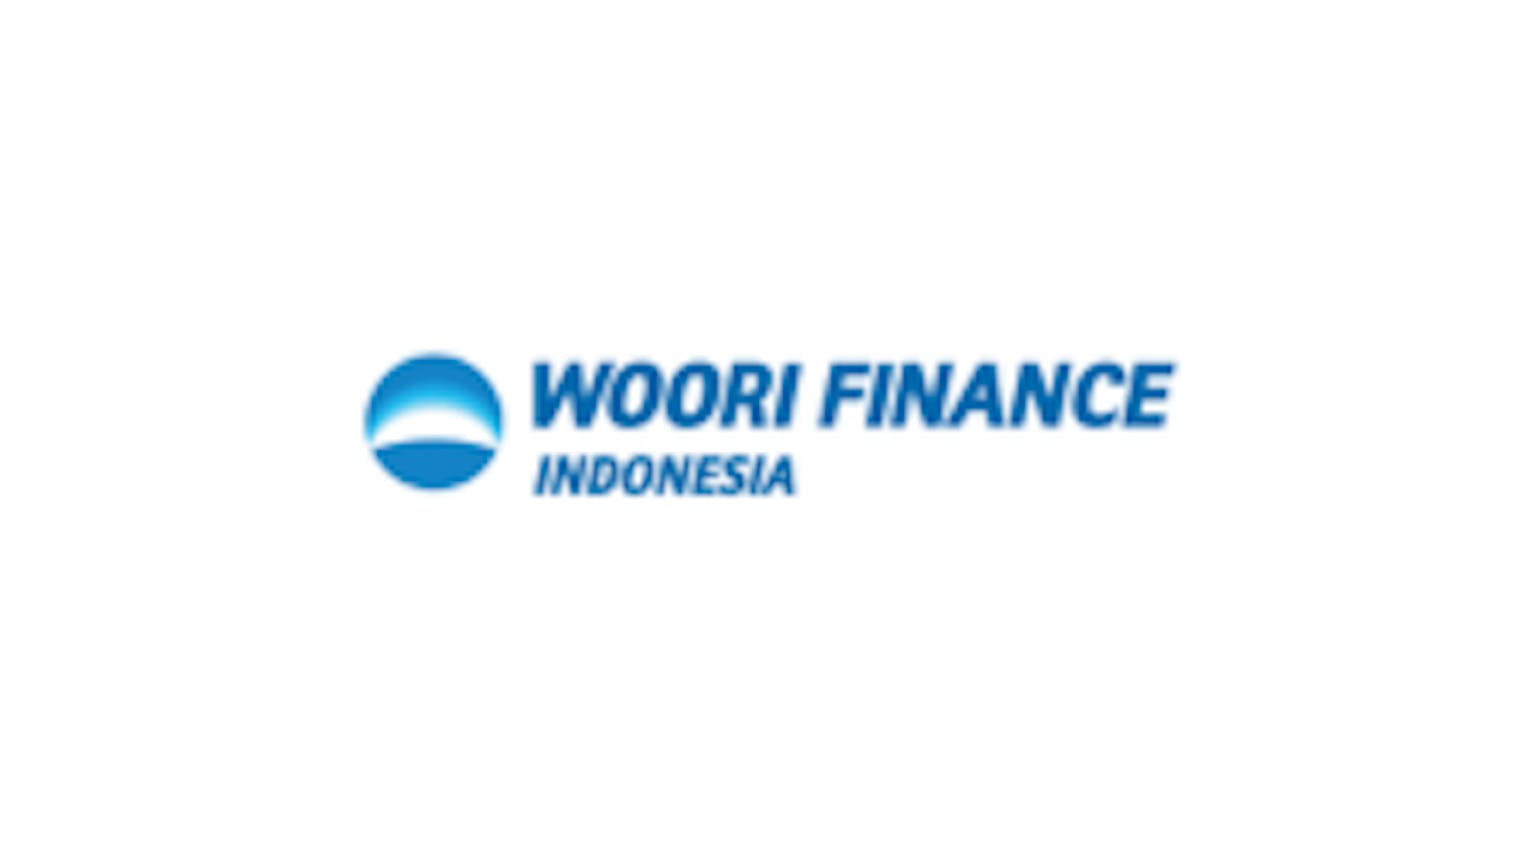 Woori Finance